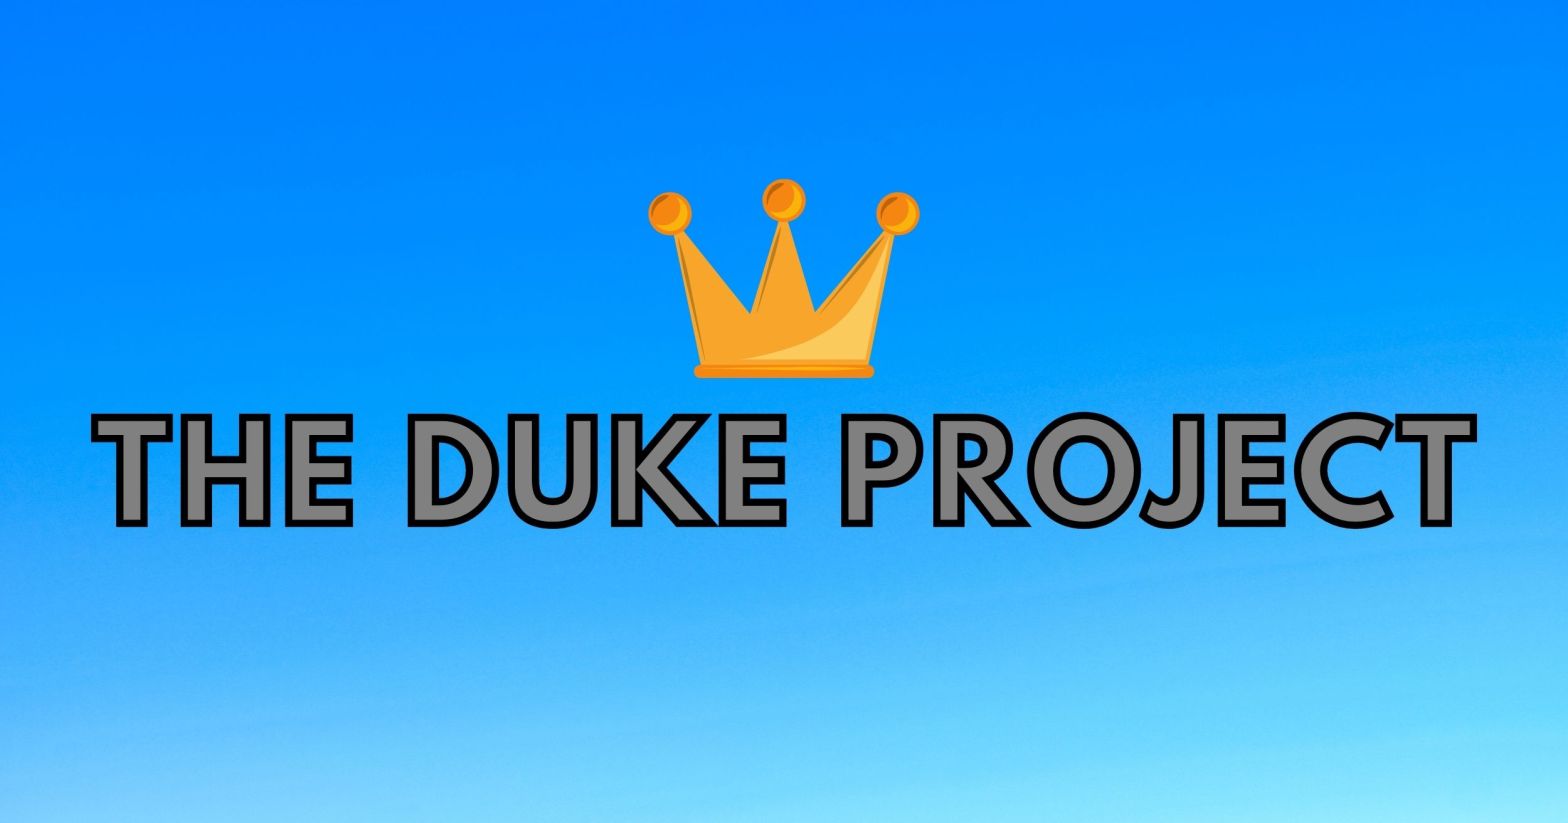 The Duke Project